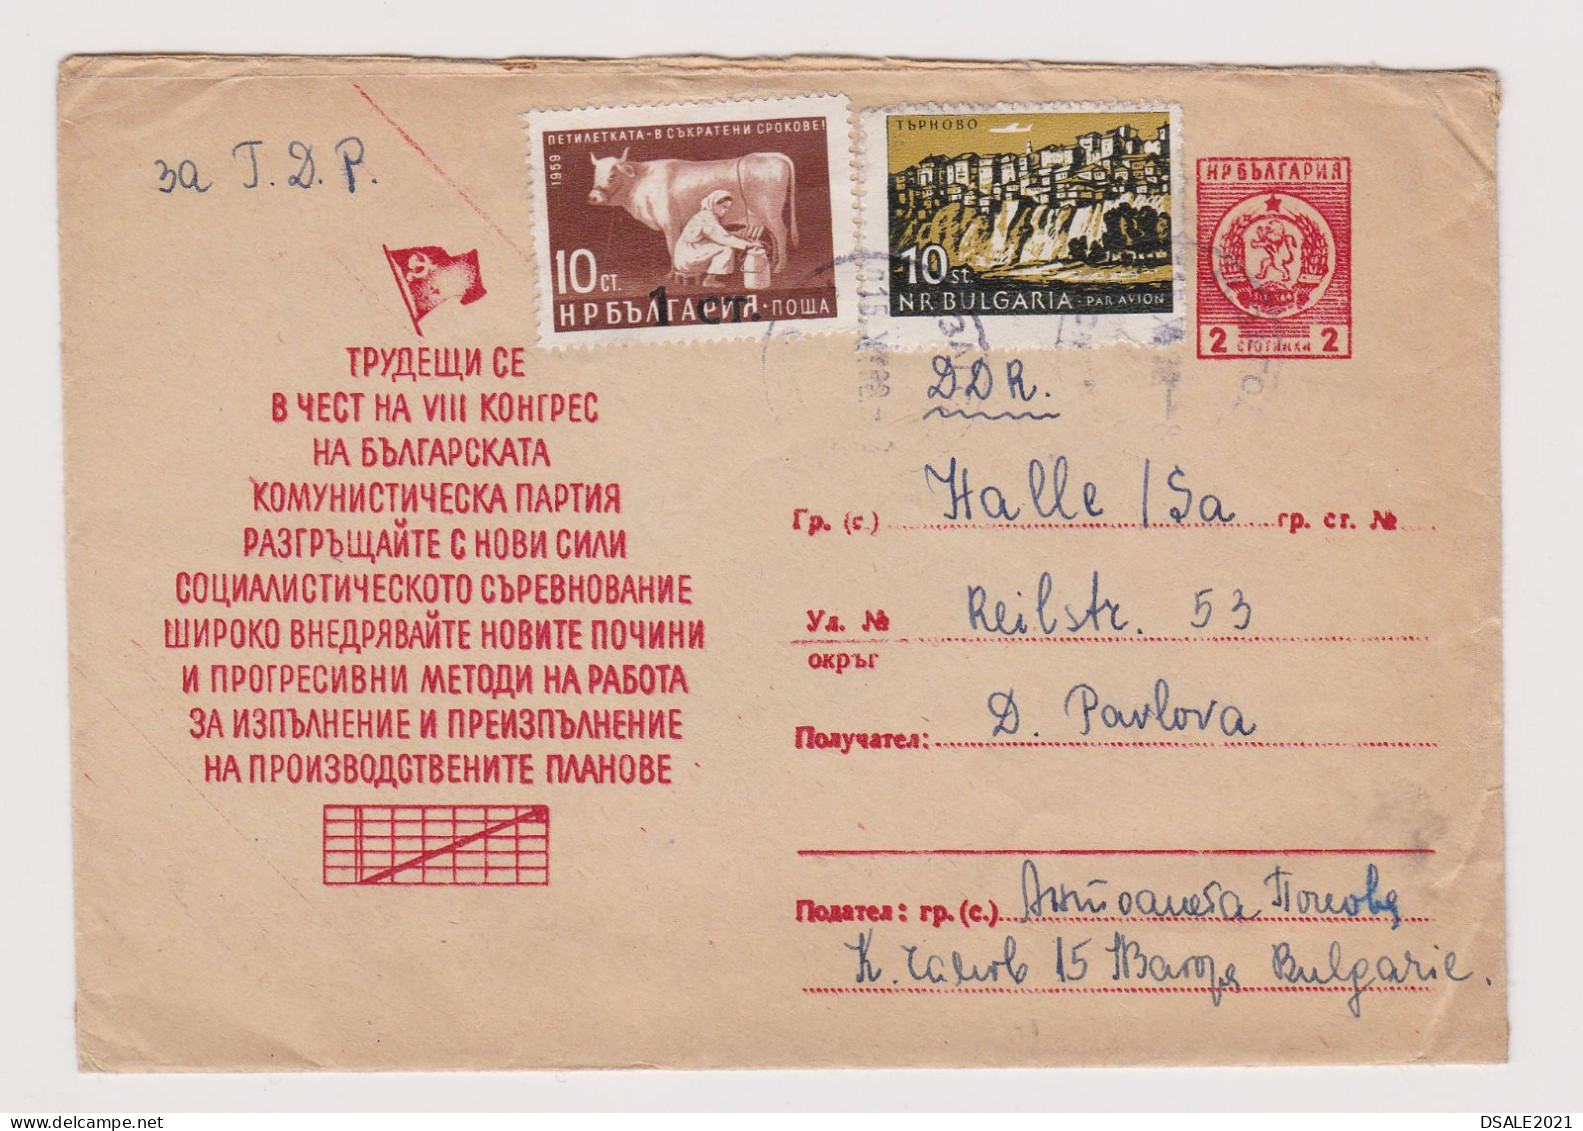 Bulgaria Bulgarie Bulgarien 1962 Ganzsachen, Entier, Stationery Cover, Communist Slogan, Topic Stamps To DDR (66241) - Omslagen